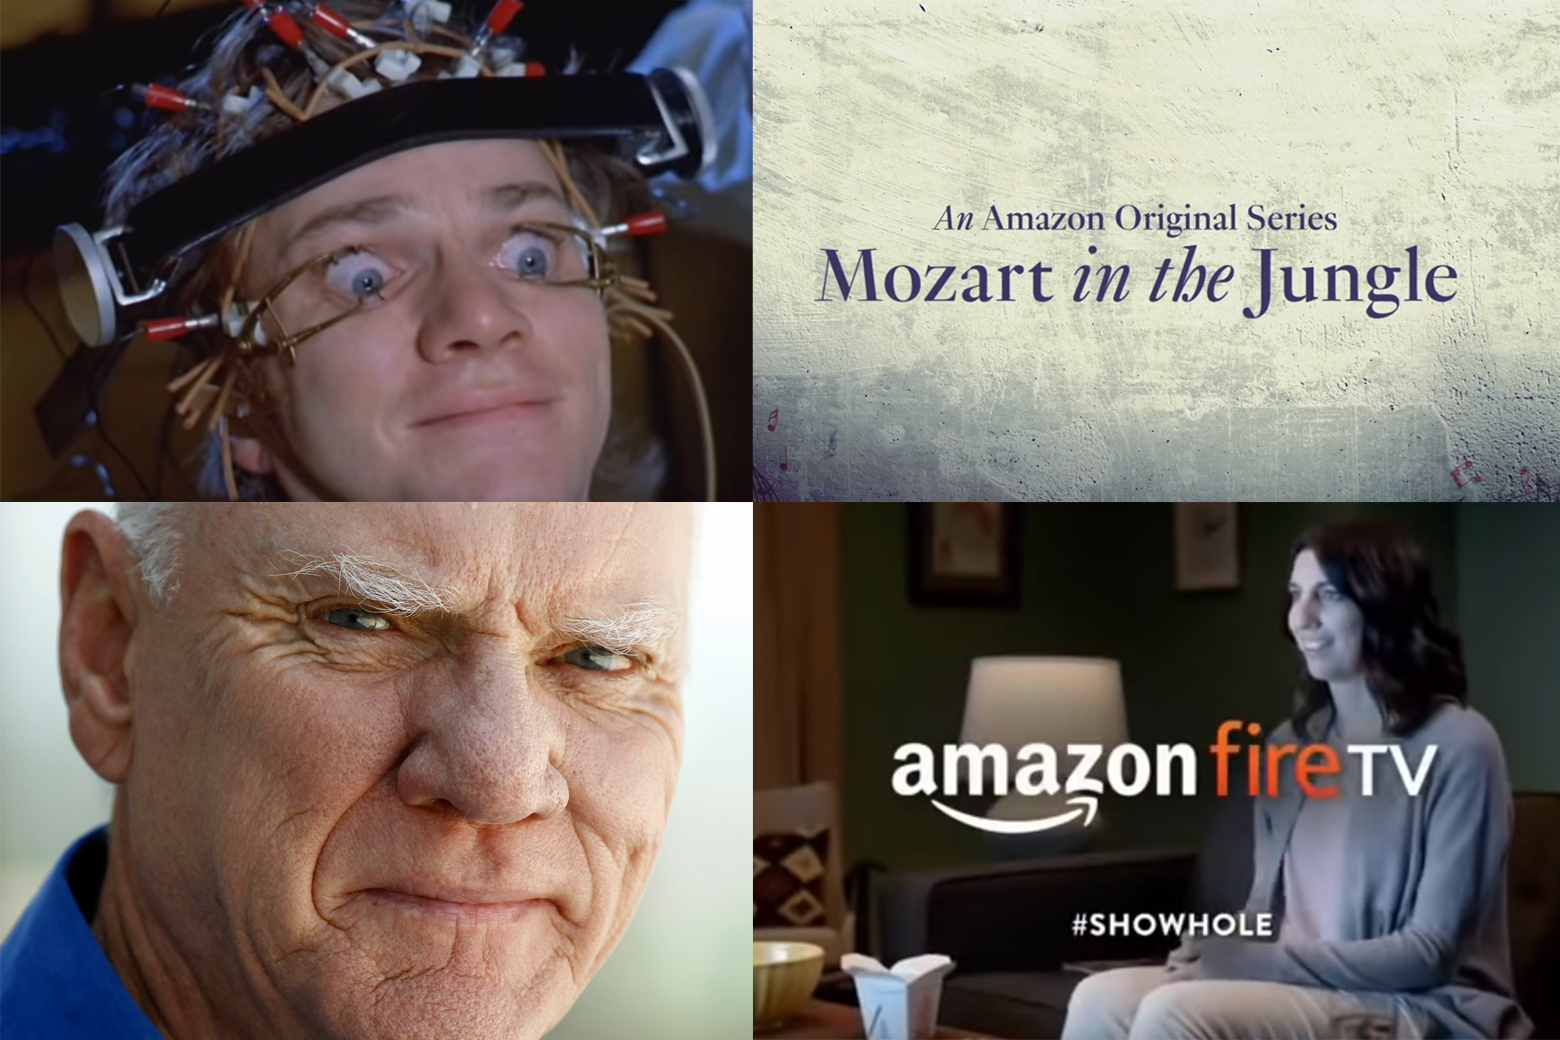 ‘A Clockwork Orange’ star enters Amazon’s ‘Show Hole’ in ‘Mozart’